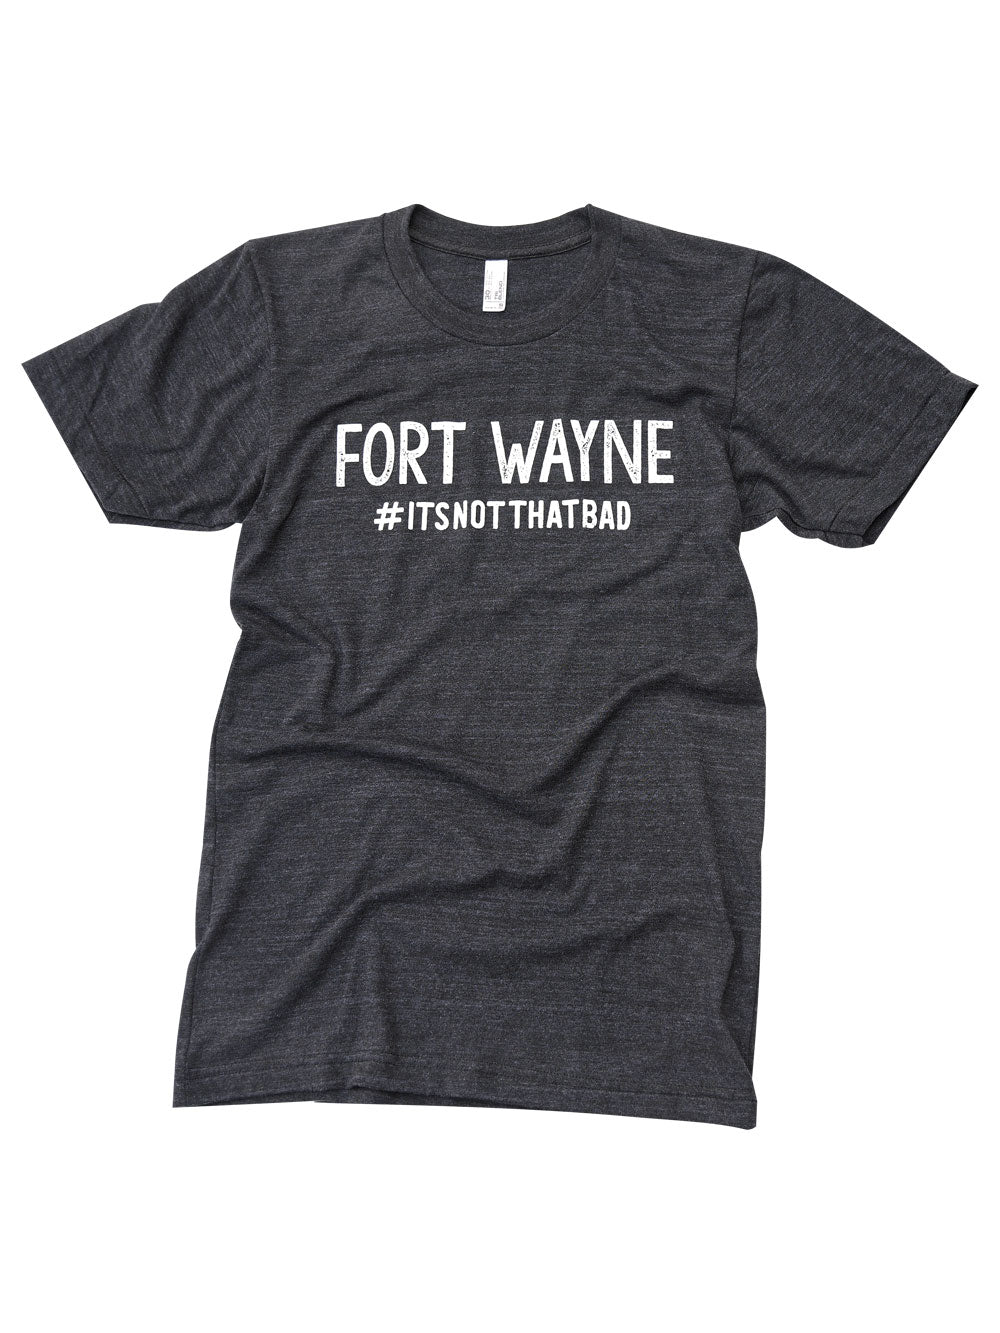 Fort Wayne #itsnotthatbad black heather t-shirt